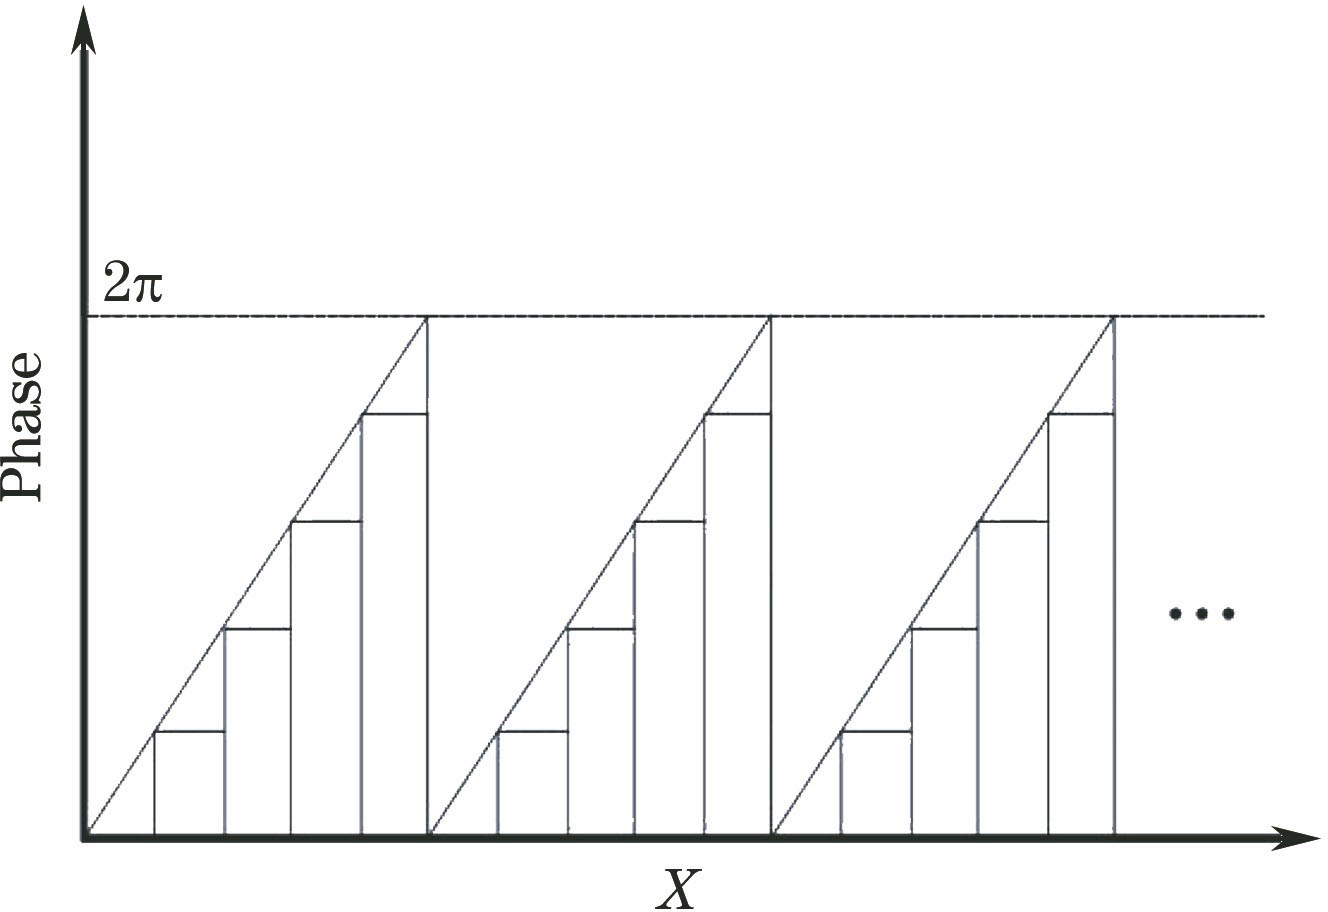 Phase modulation distribution of LCOPA